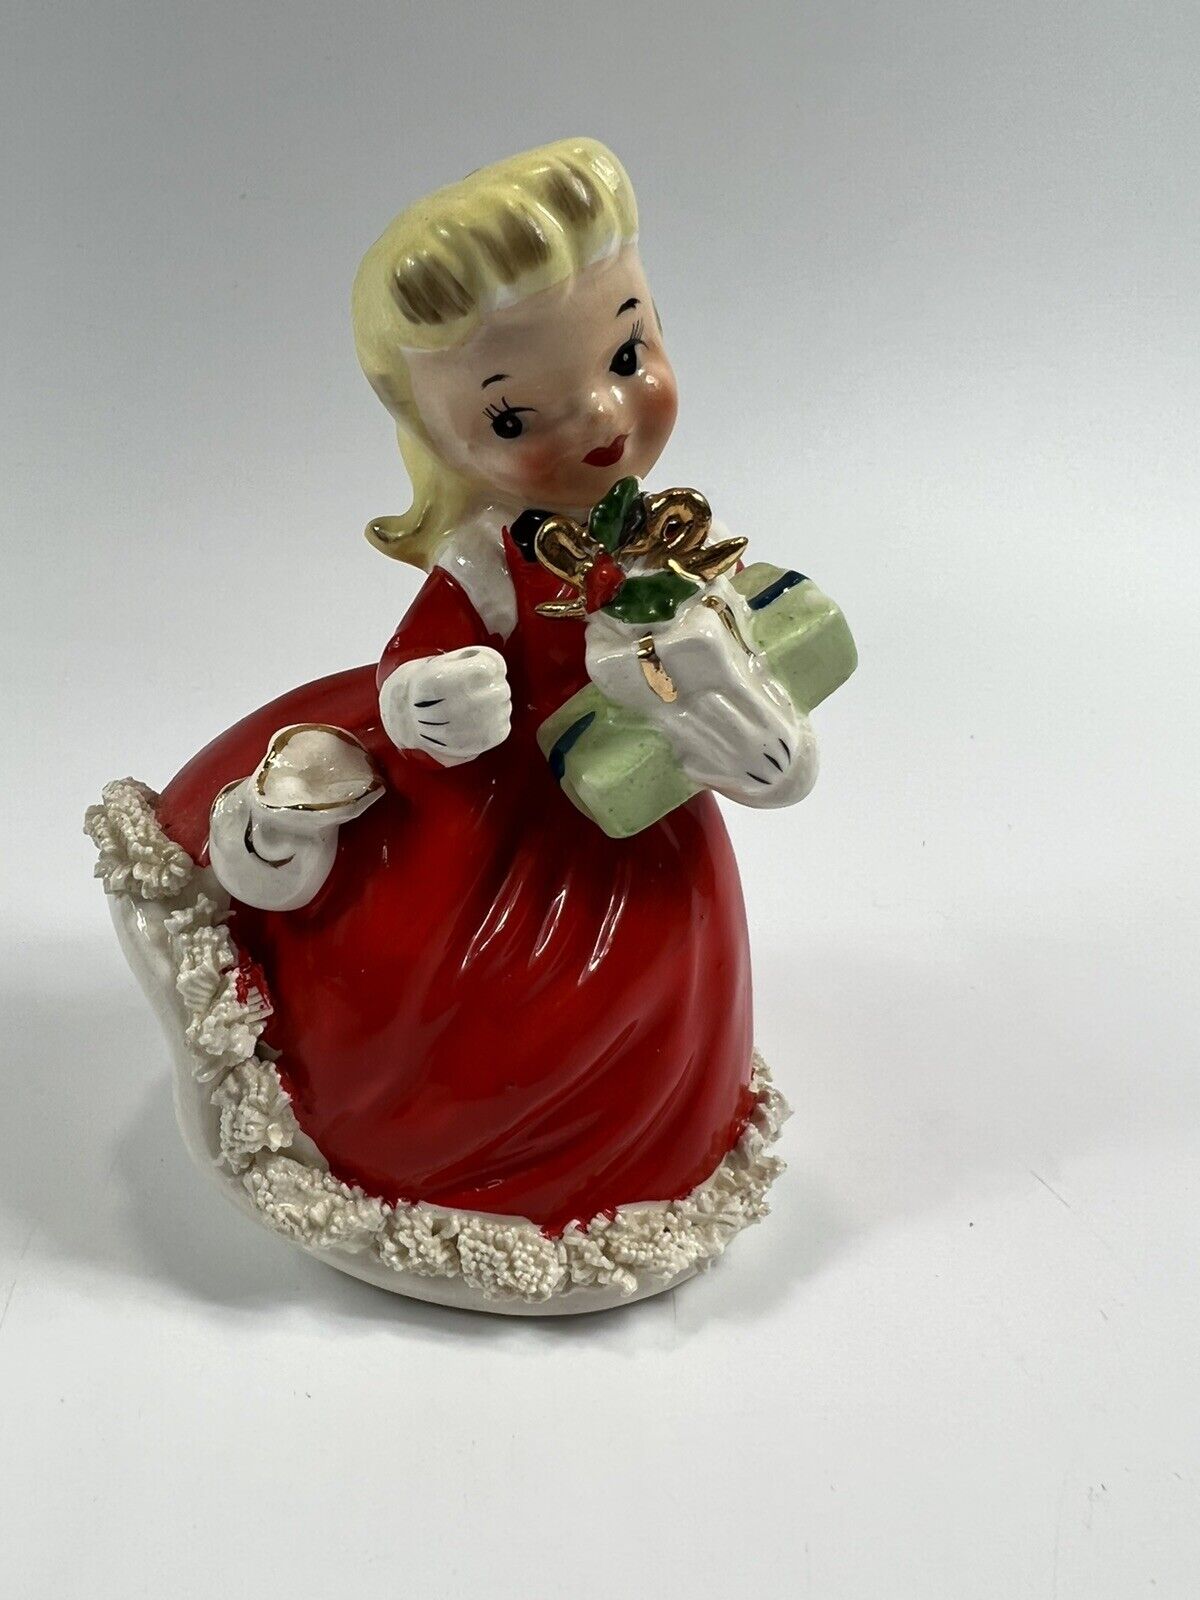 1956 Vintage NAPCO Japan Ceramic Christmas Girl with Gifts